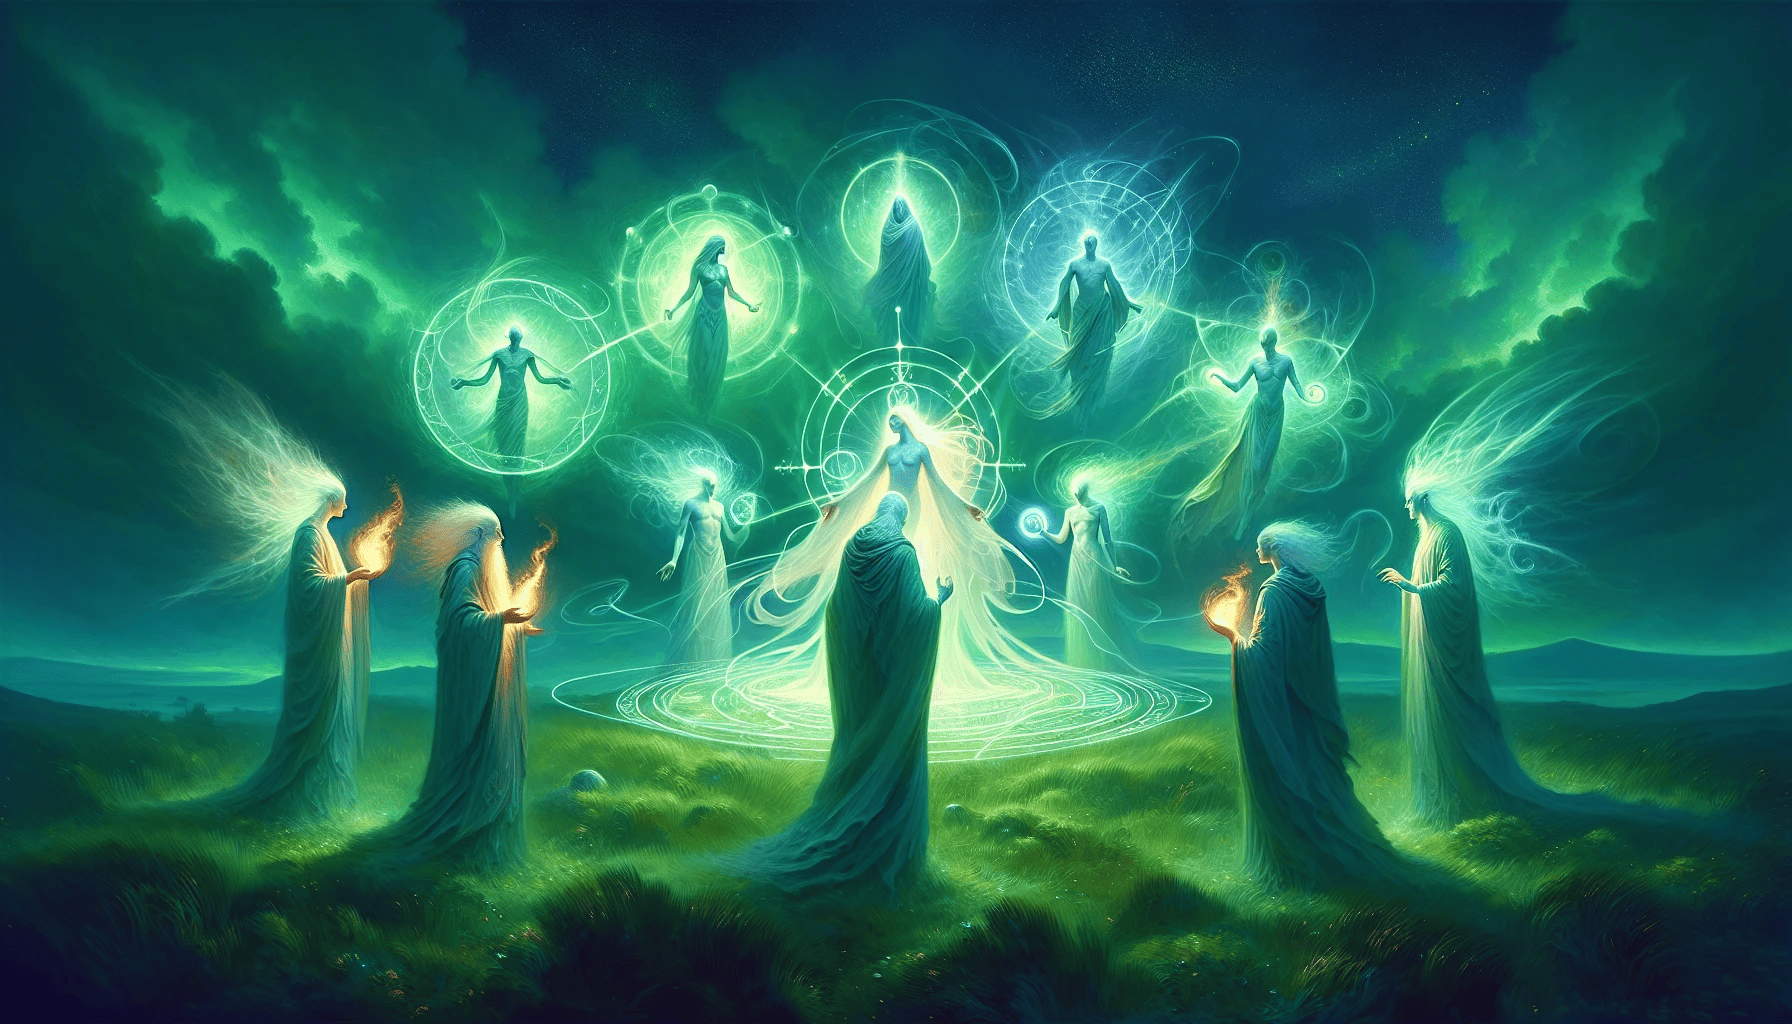 Illustration of the Tuatha Dé Danann, legendary Irish gods and goddesses